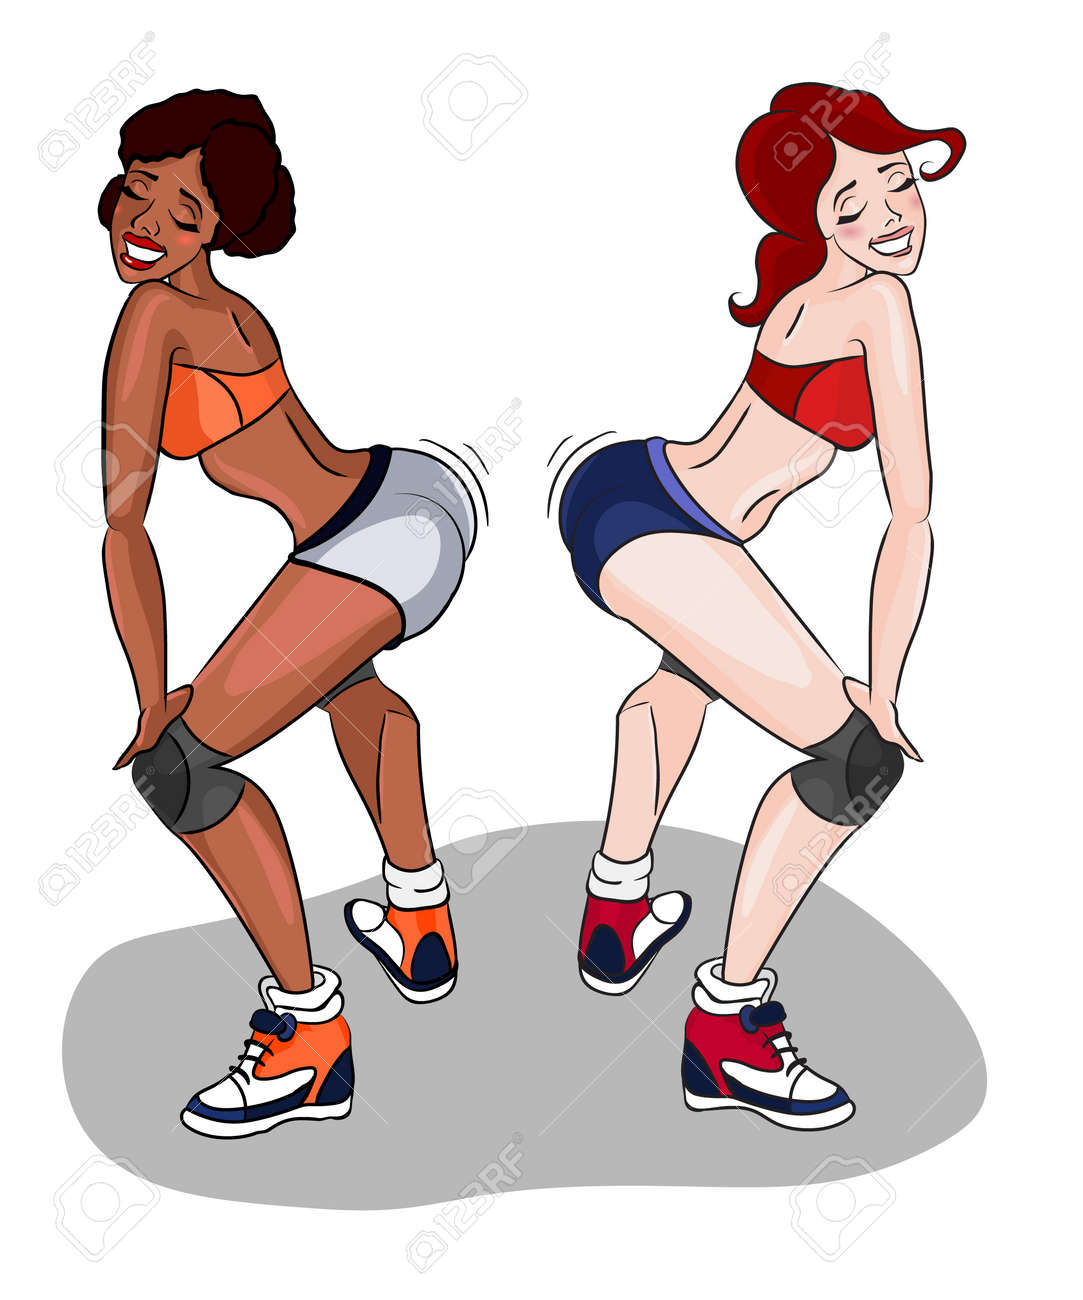 59103309-twerk-dance-two-women-vector-illustration-girls-in-sport-bra-and-shorts-dancing-half-sitting-twerk-c.jpg